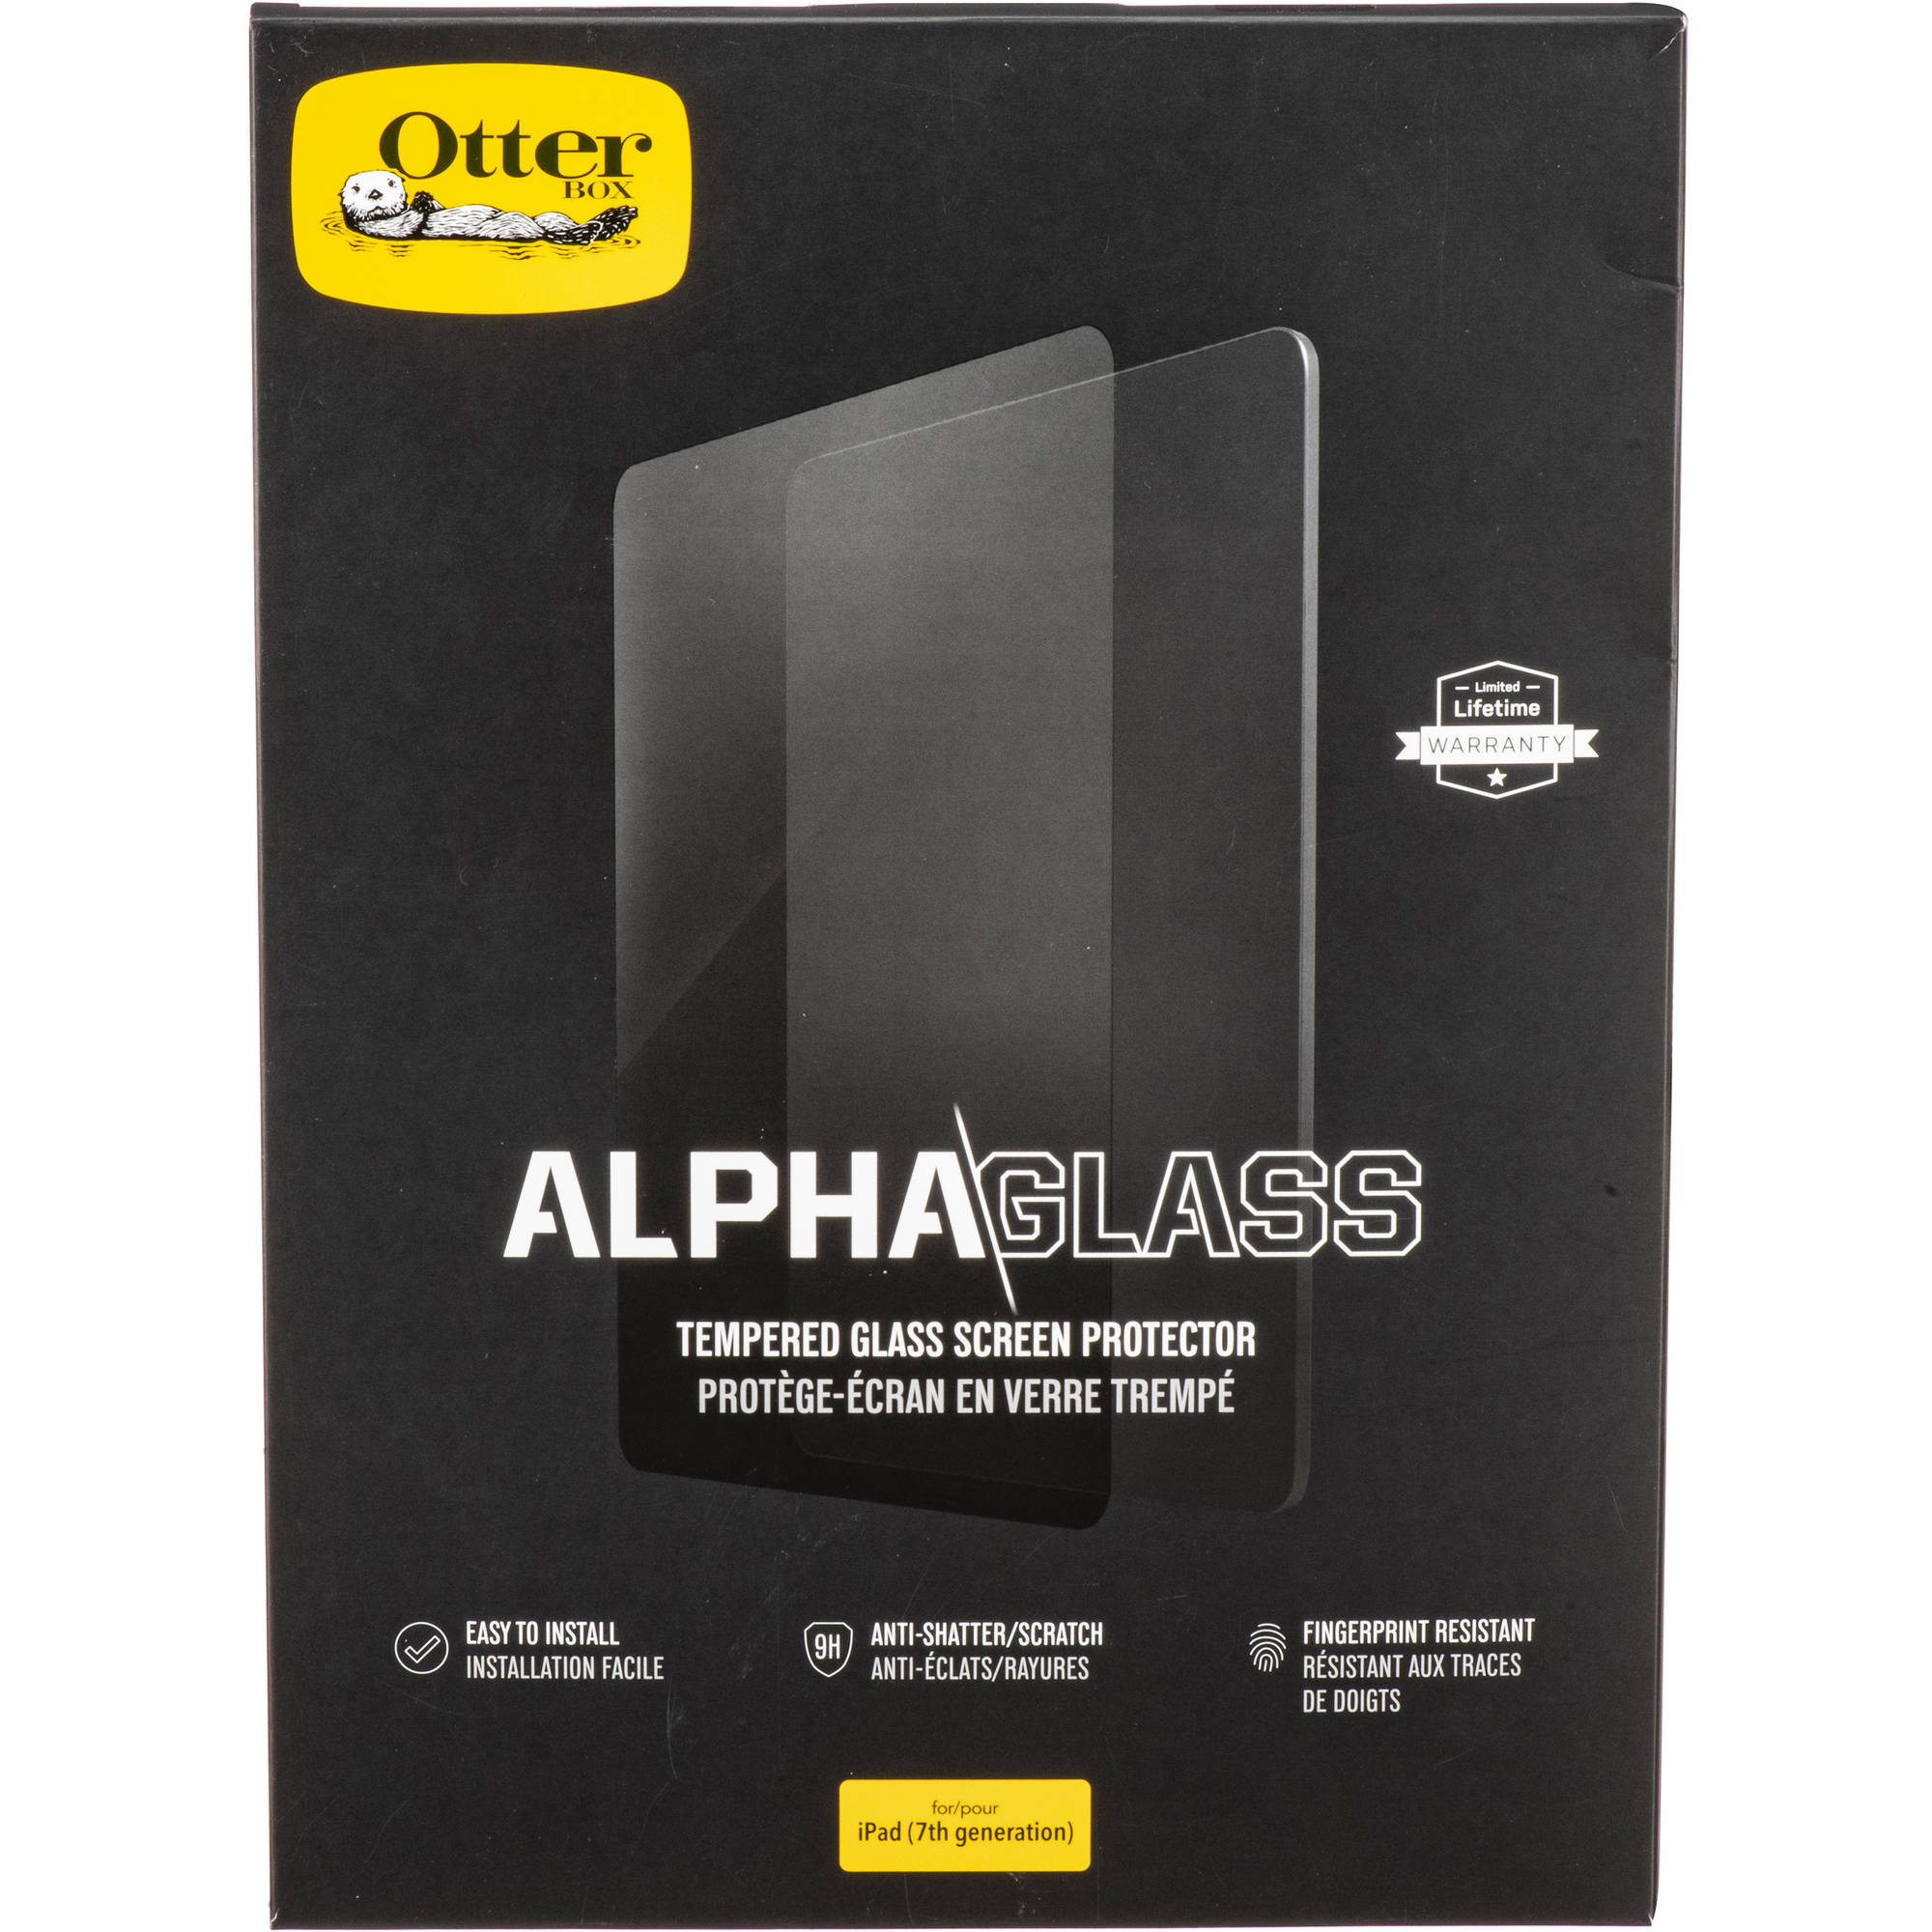 Otterbox AlphaGlass